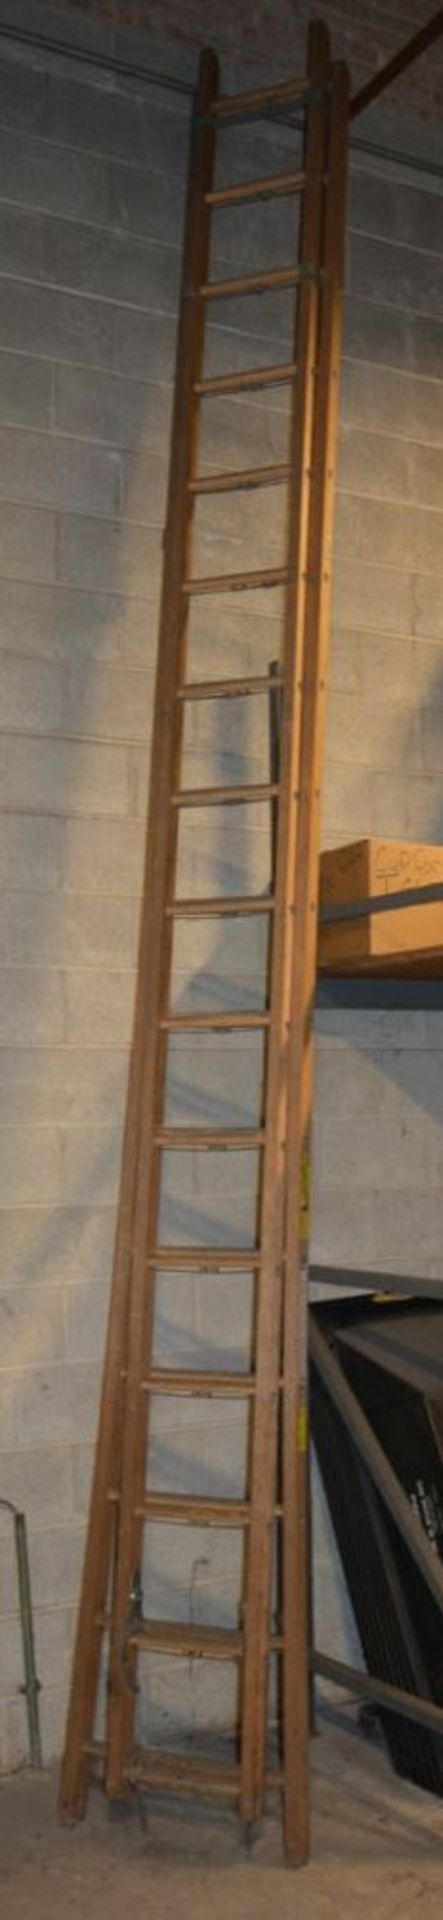 Blue Ribbon 32' Wood Extention Ladder